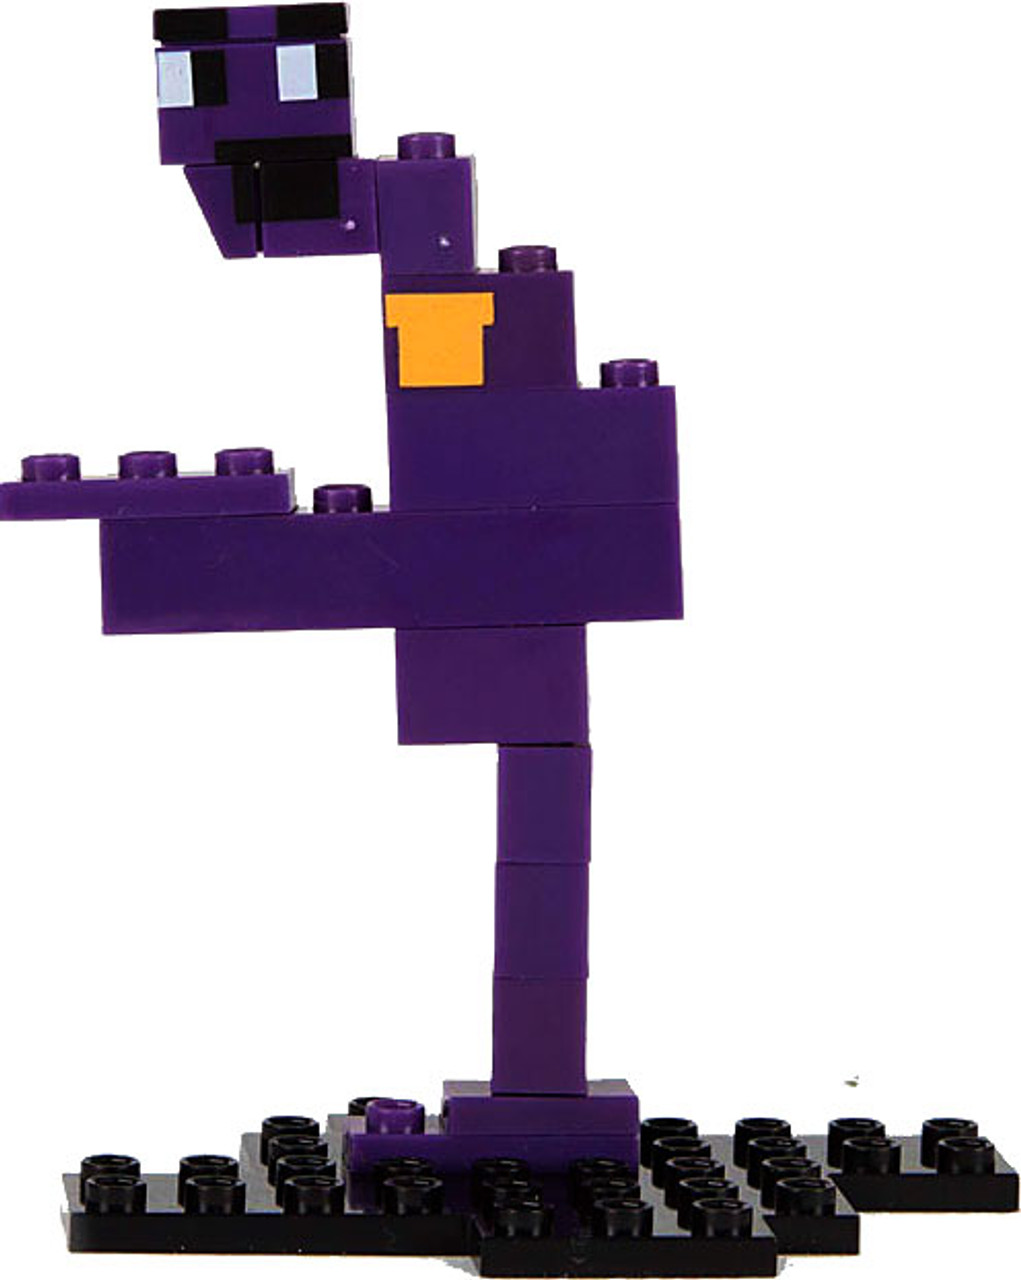 Mcfarlane Toys Five Nights At Freddys 8 Bit Series 1 Purple Guy Buildable Figure 12045 Golden Freddy Piece Toywiz - roblox purple guy fnaf